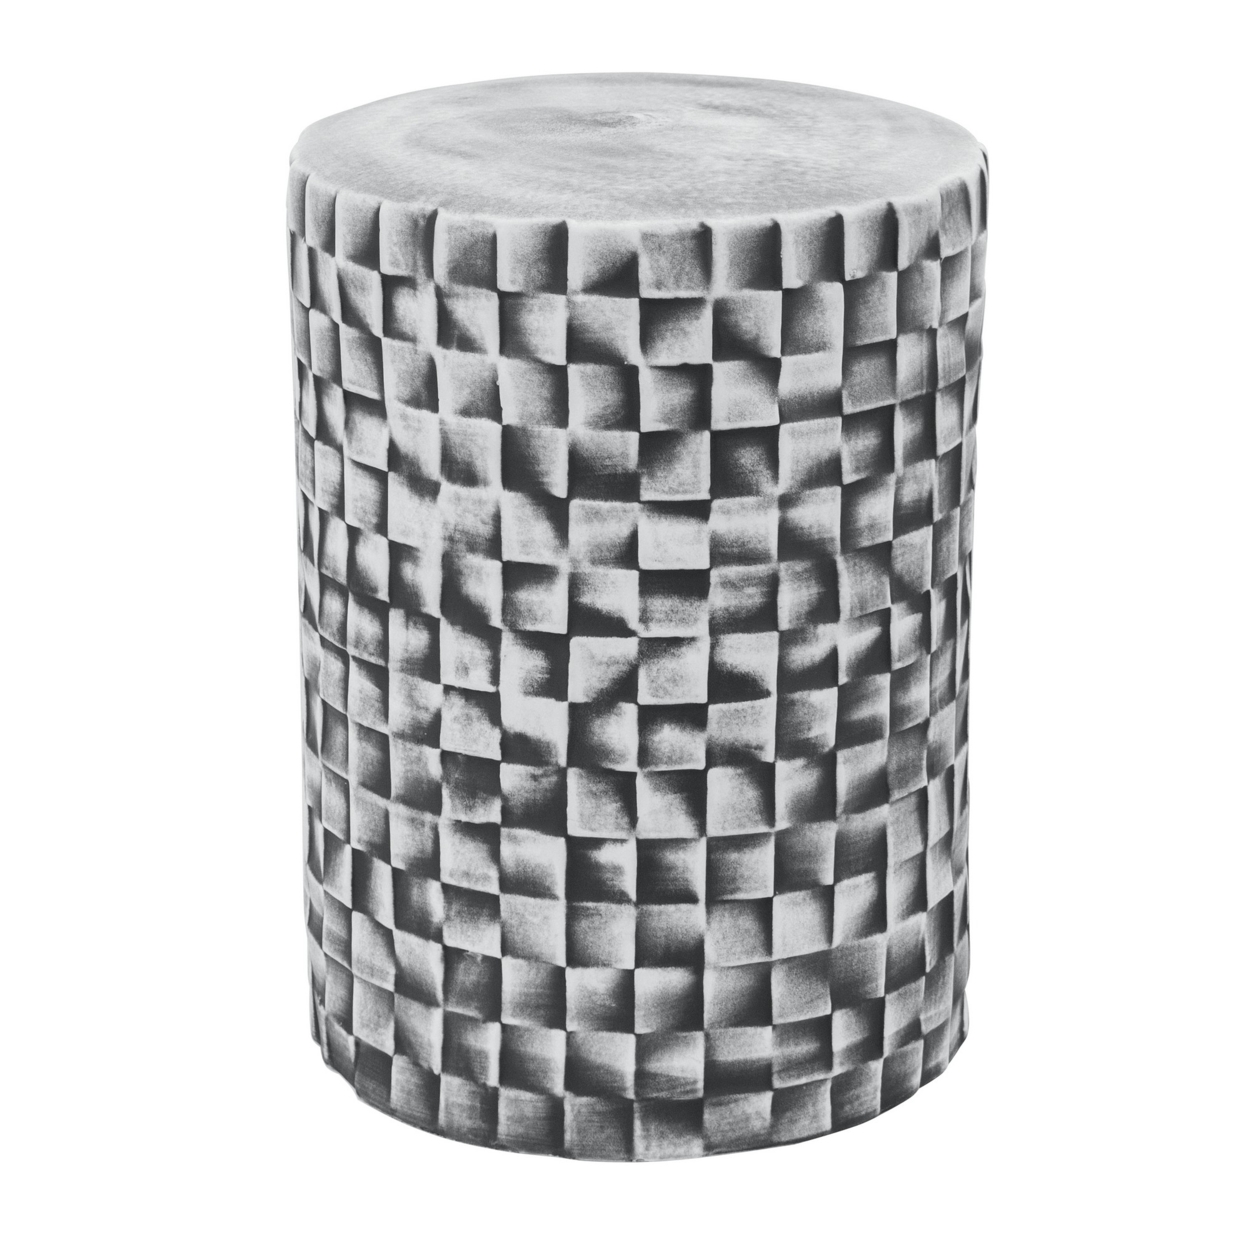 18 Inch Stool Table, Ceramic, Cylindrical, Textured Geometry, Outdoor, Gray, Saltoro Sherpi